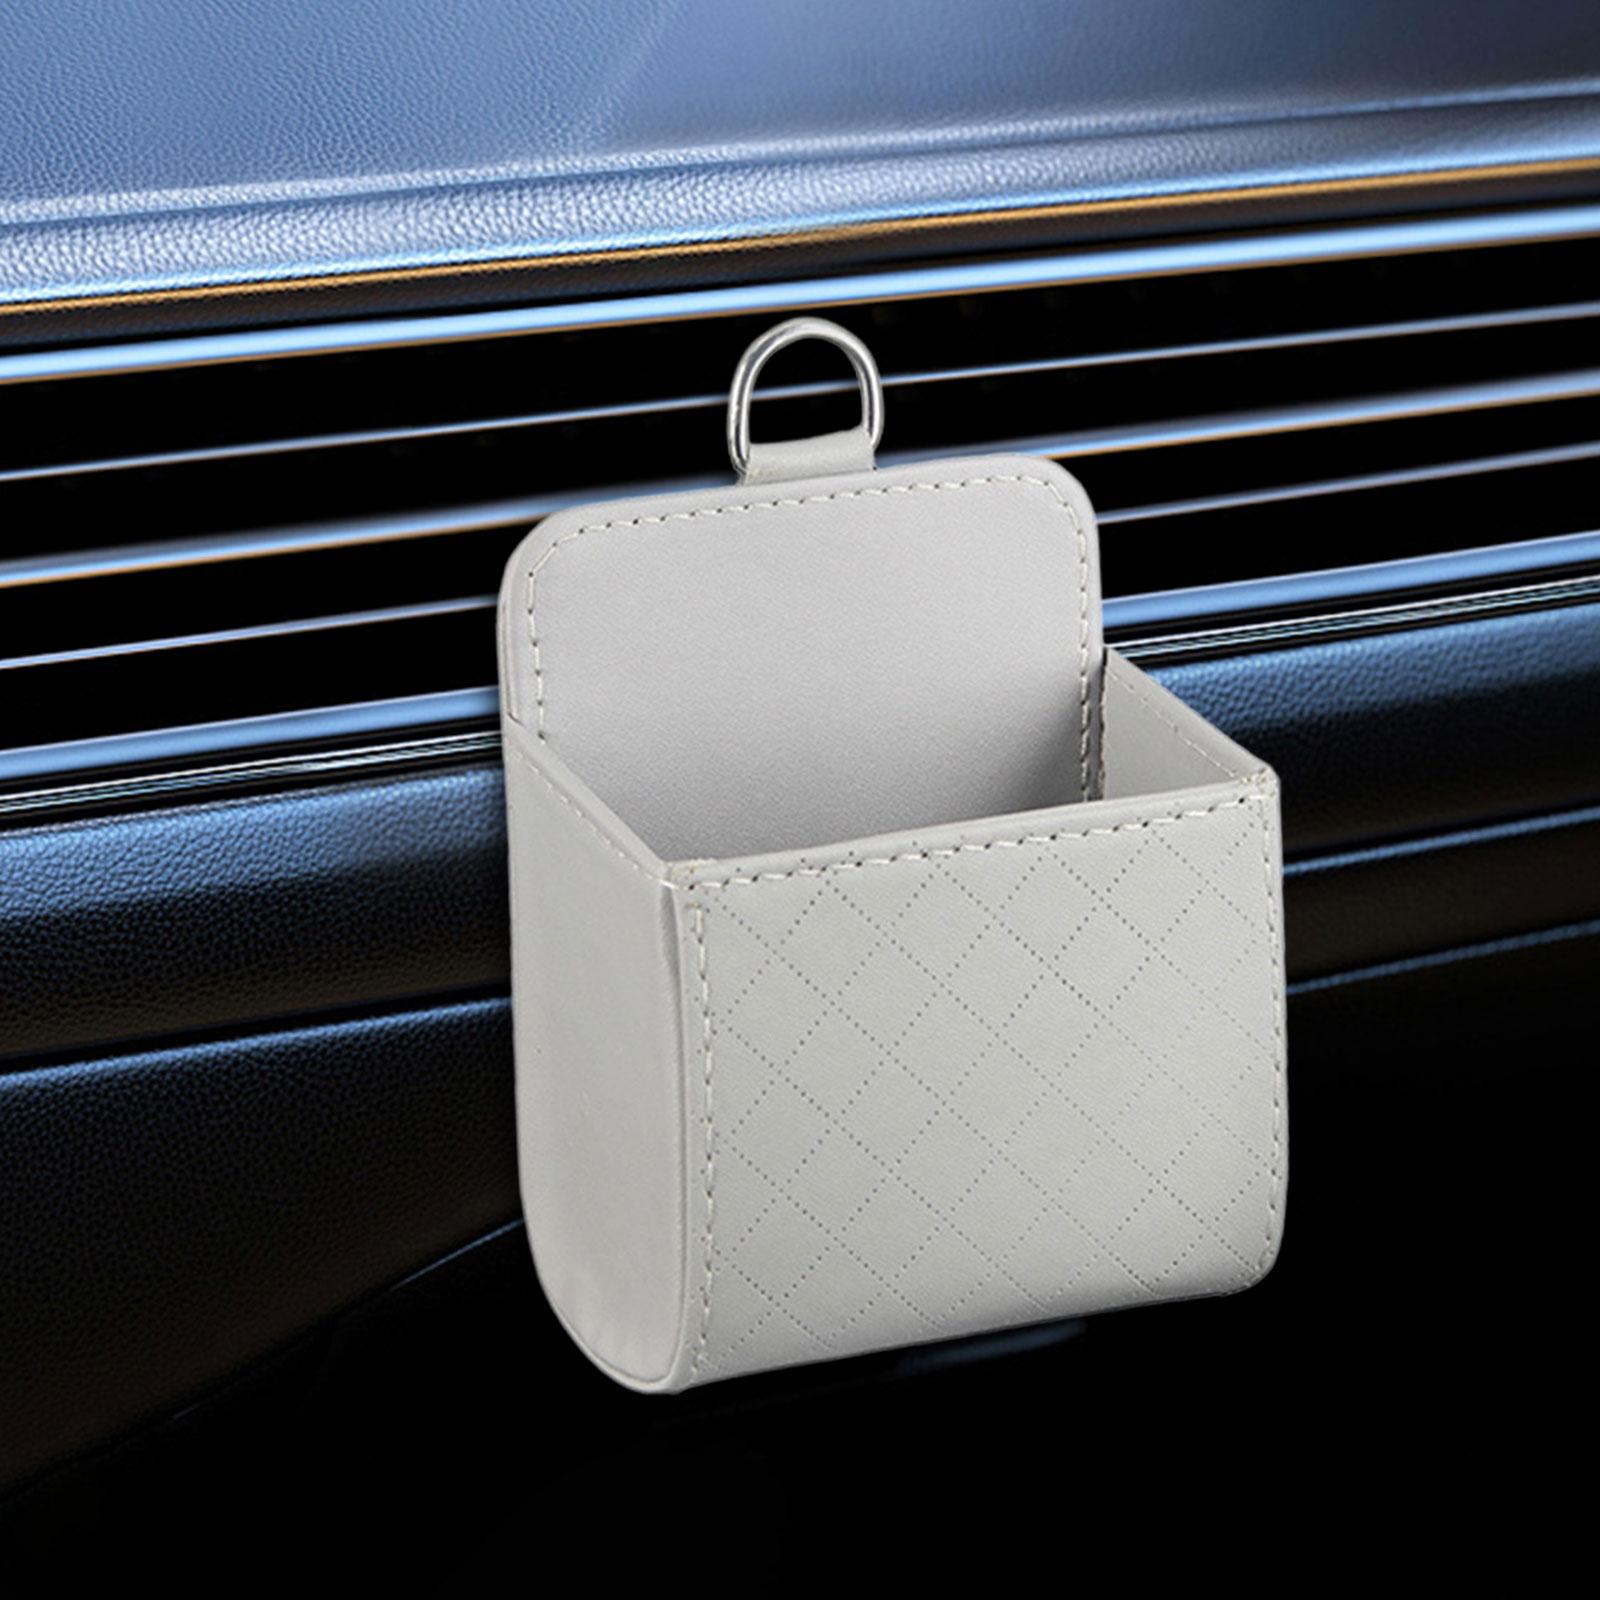 Car Air Vent Bag Organizer Durable Air Vent Holder Bag for Phones Bills Gray